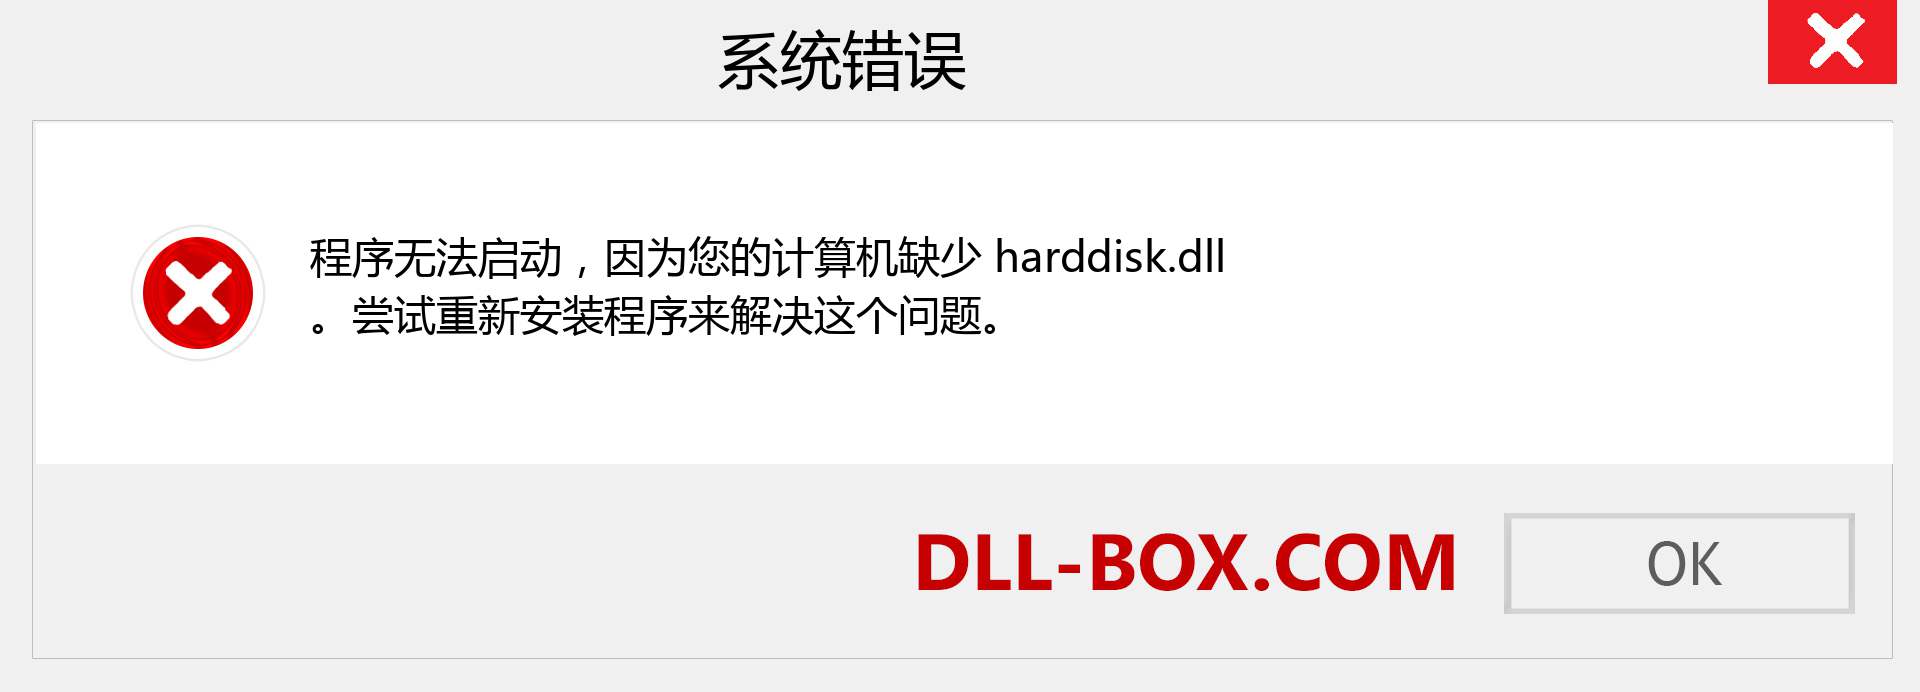 harddisk.dll 文件丢失？。 适用于 Windows 7、8、10 的下载 - 修复 Windows、照片、图像上的 harddisk dll 丢失错误